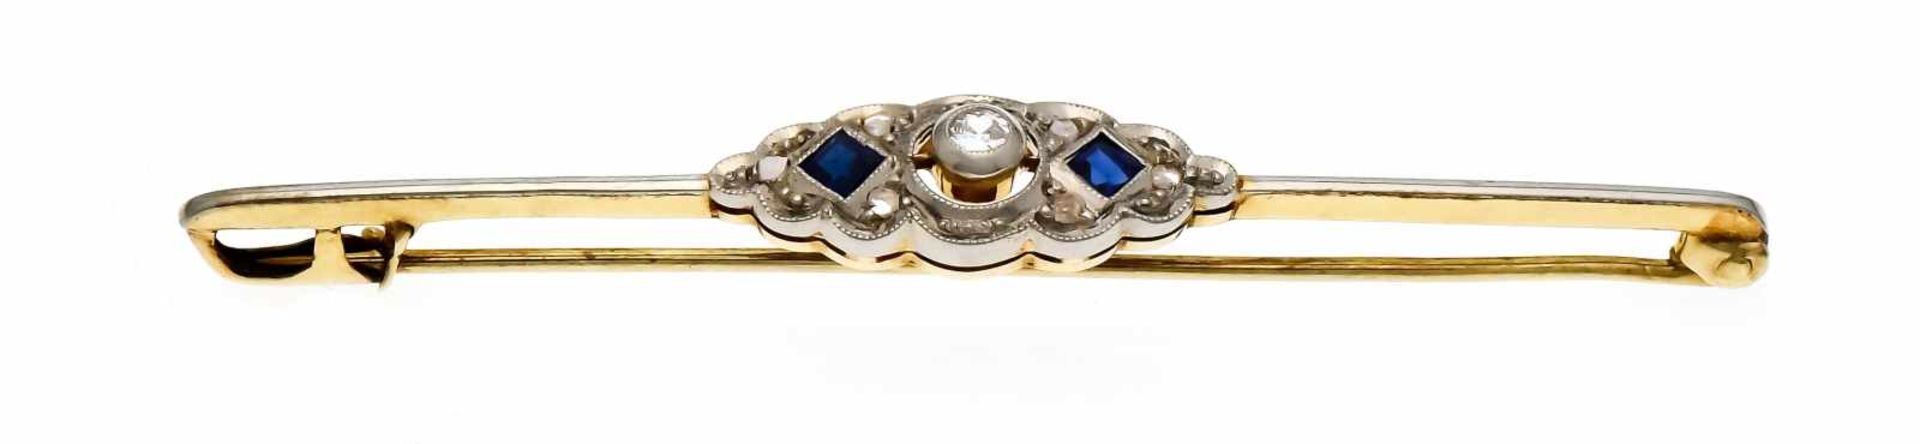 Art Deco brooch GG / WG 585/000 with 2 fac. Sapphire carrés 2 mm, an old cut diamond 0.03<